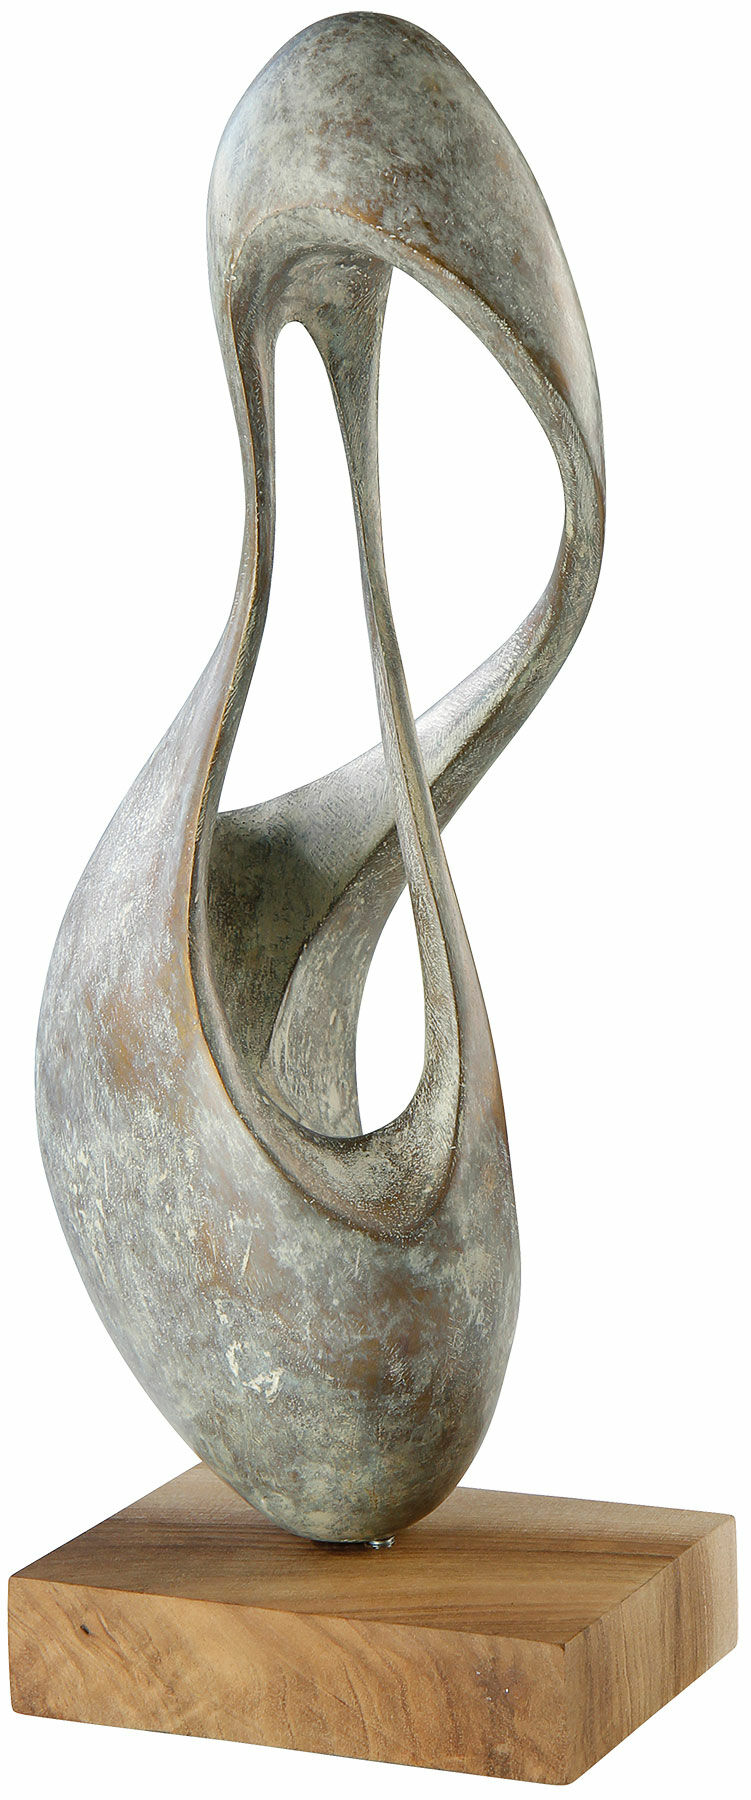 Sculpture "Breathing 7" (2015/16), bronze by Yves Rasch